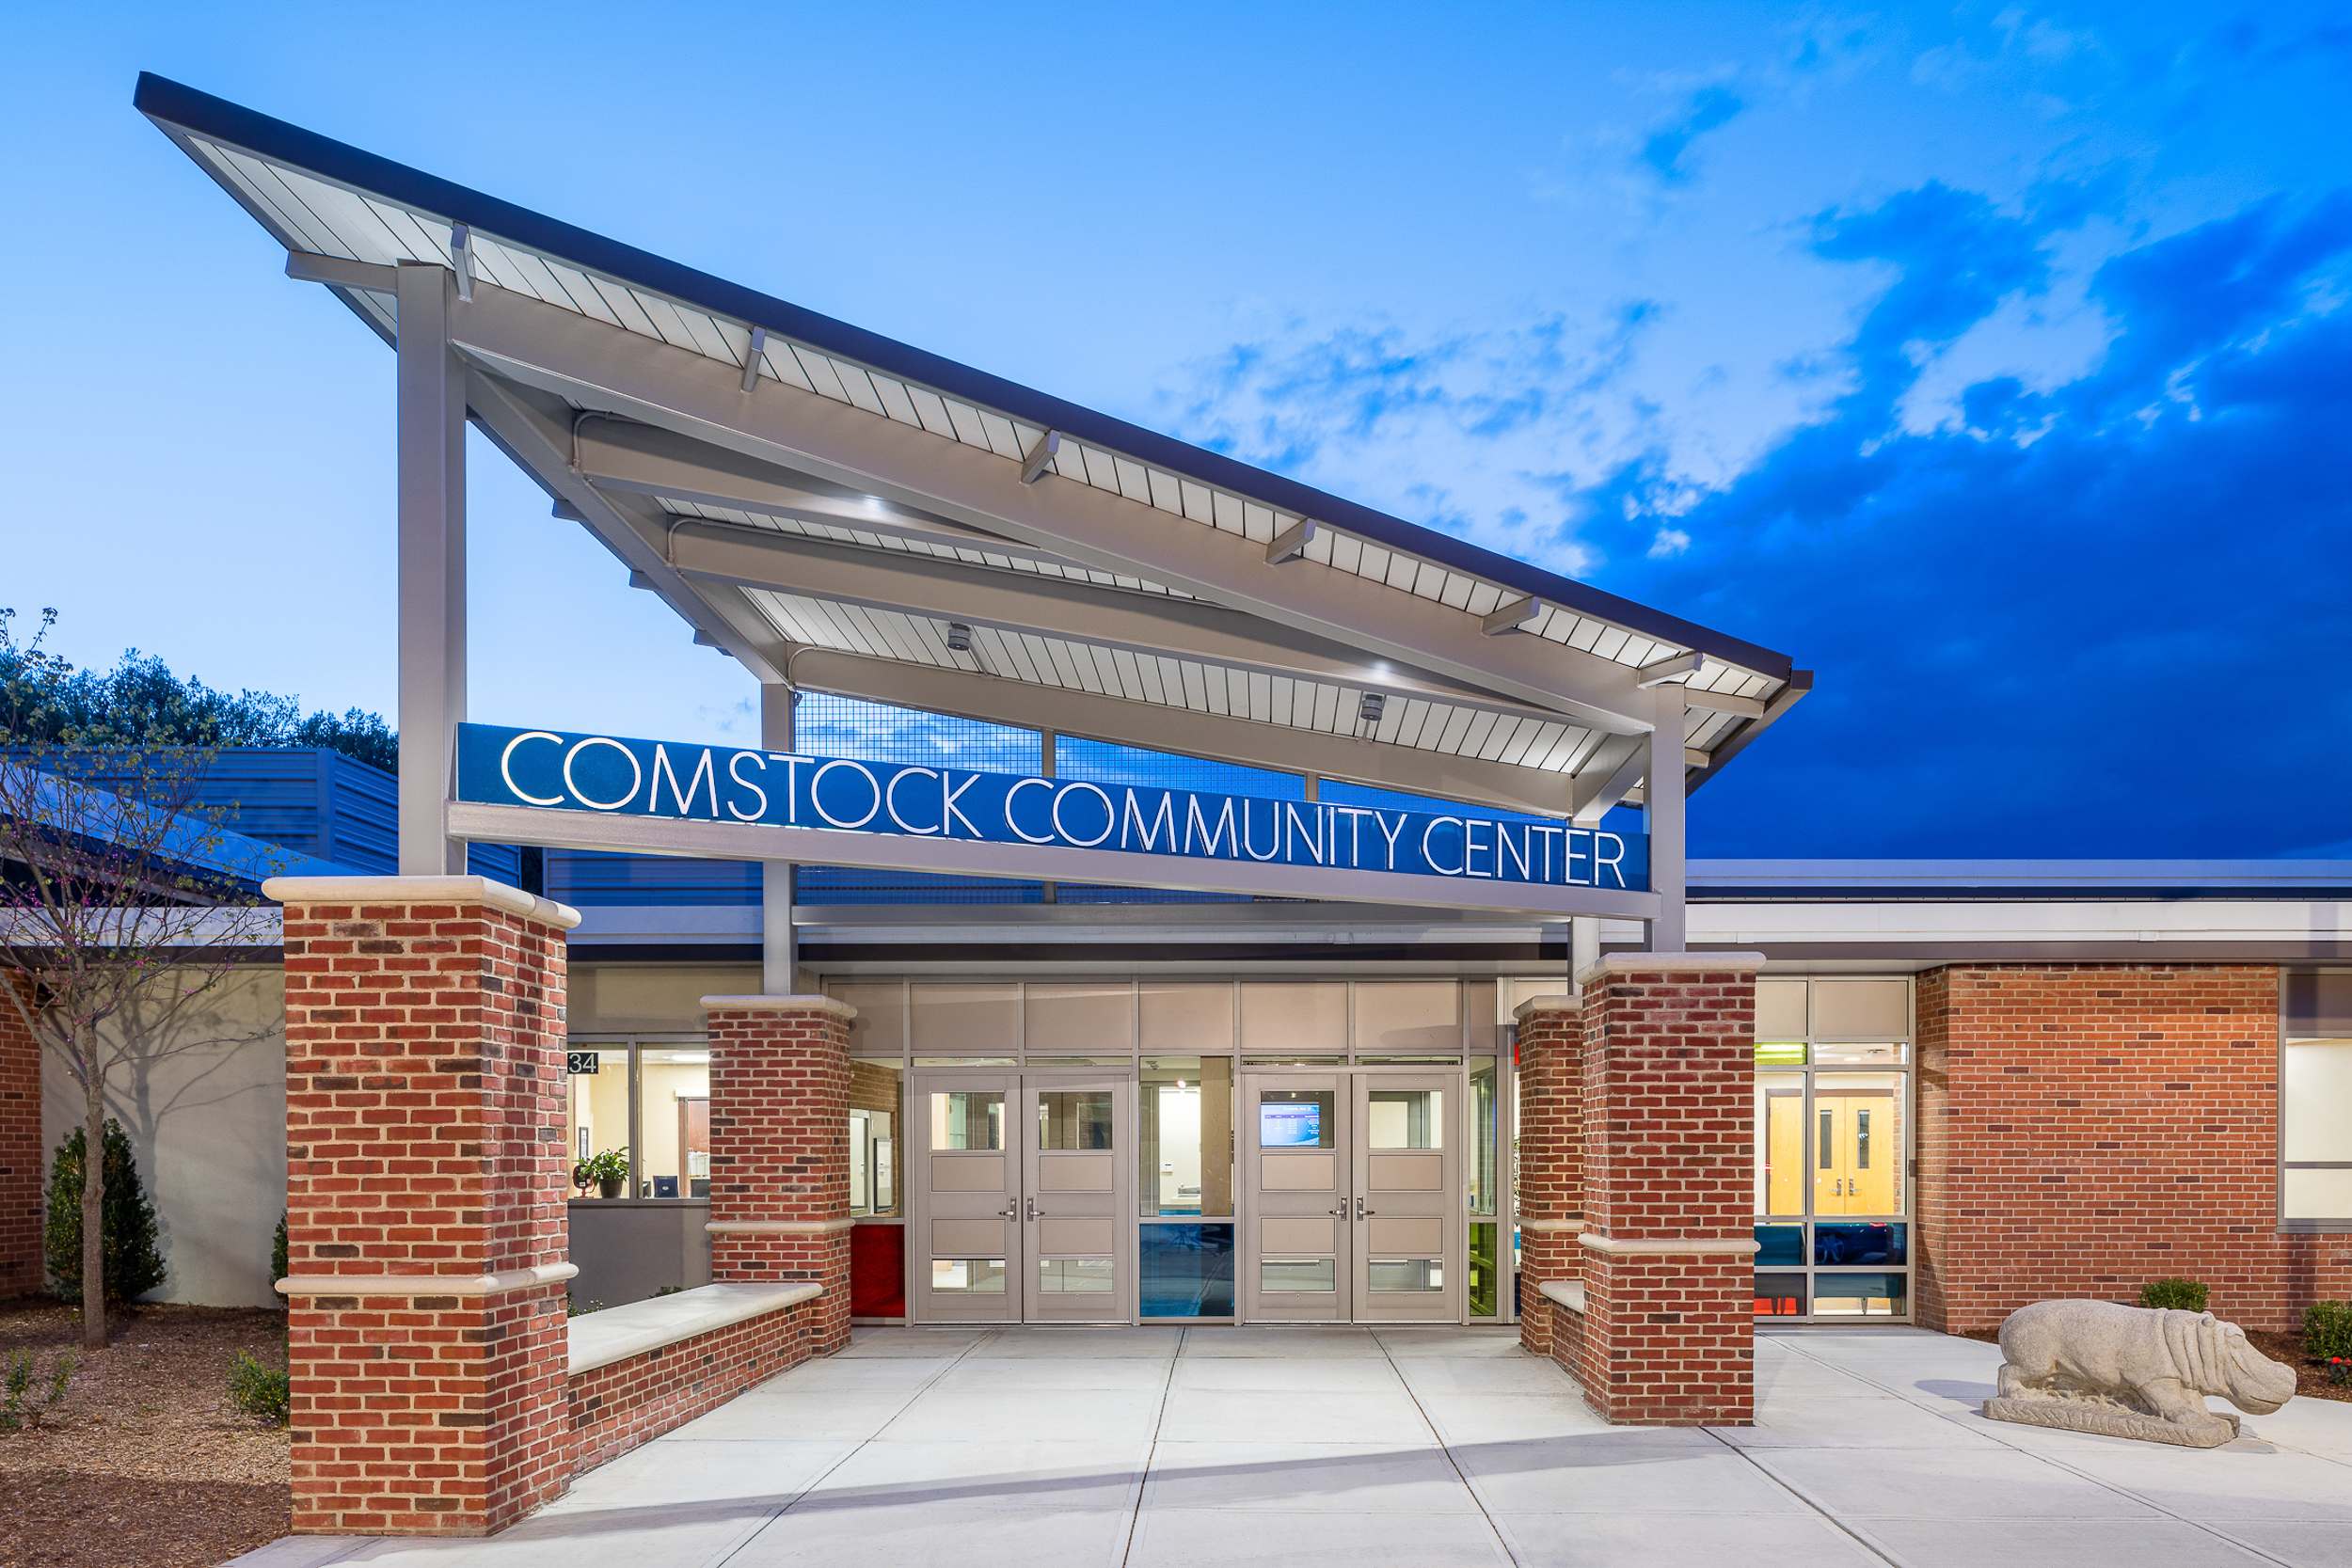 Main entrance to Comstock Community Center, Wilton CT. 